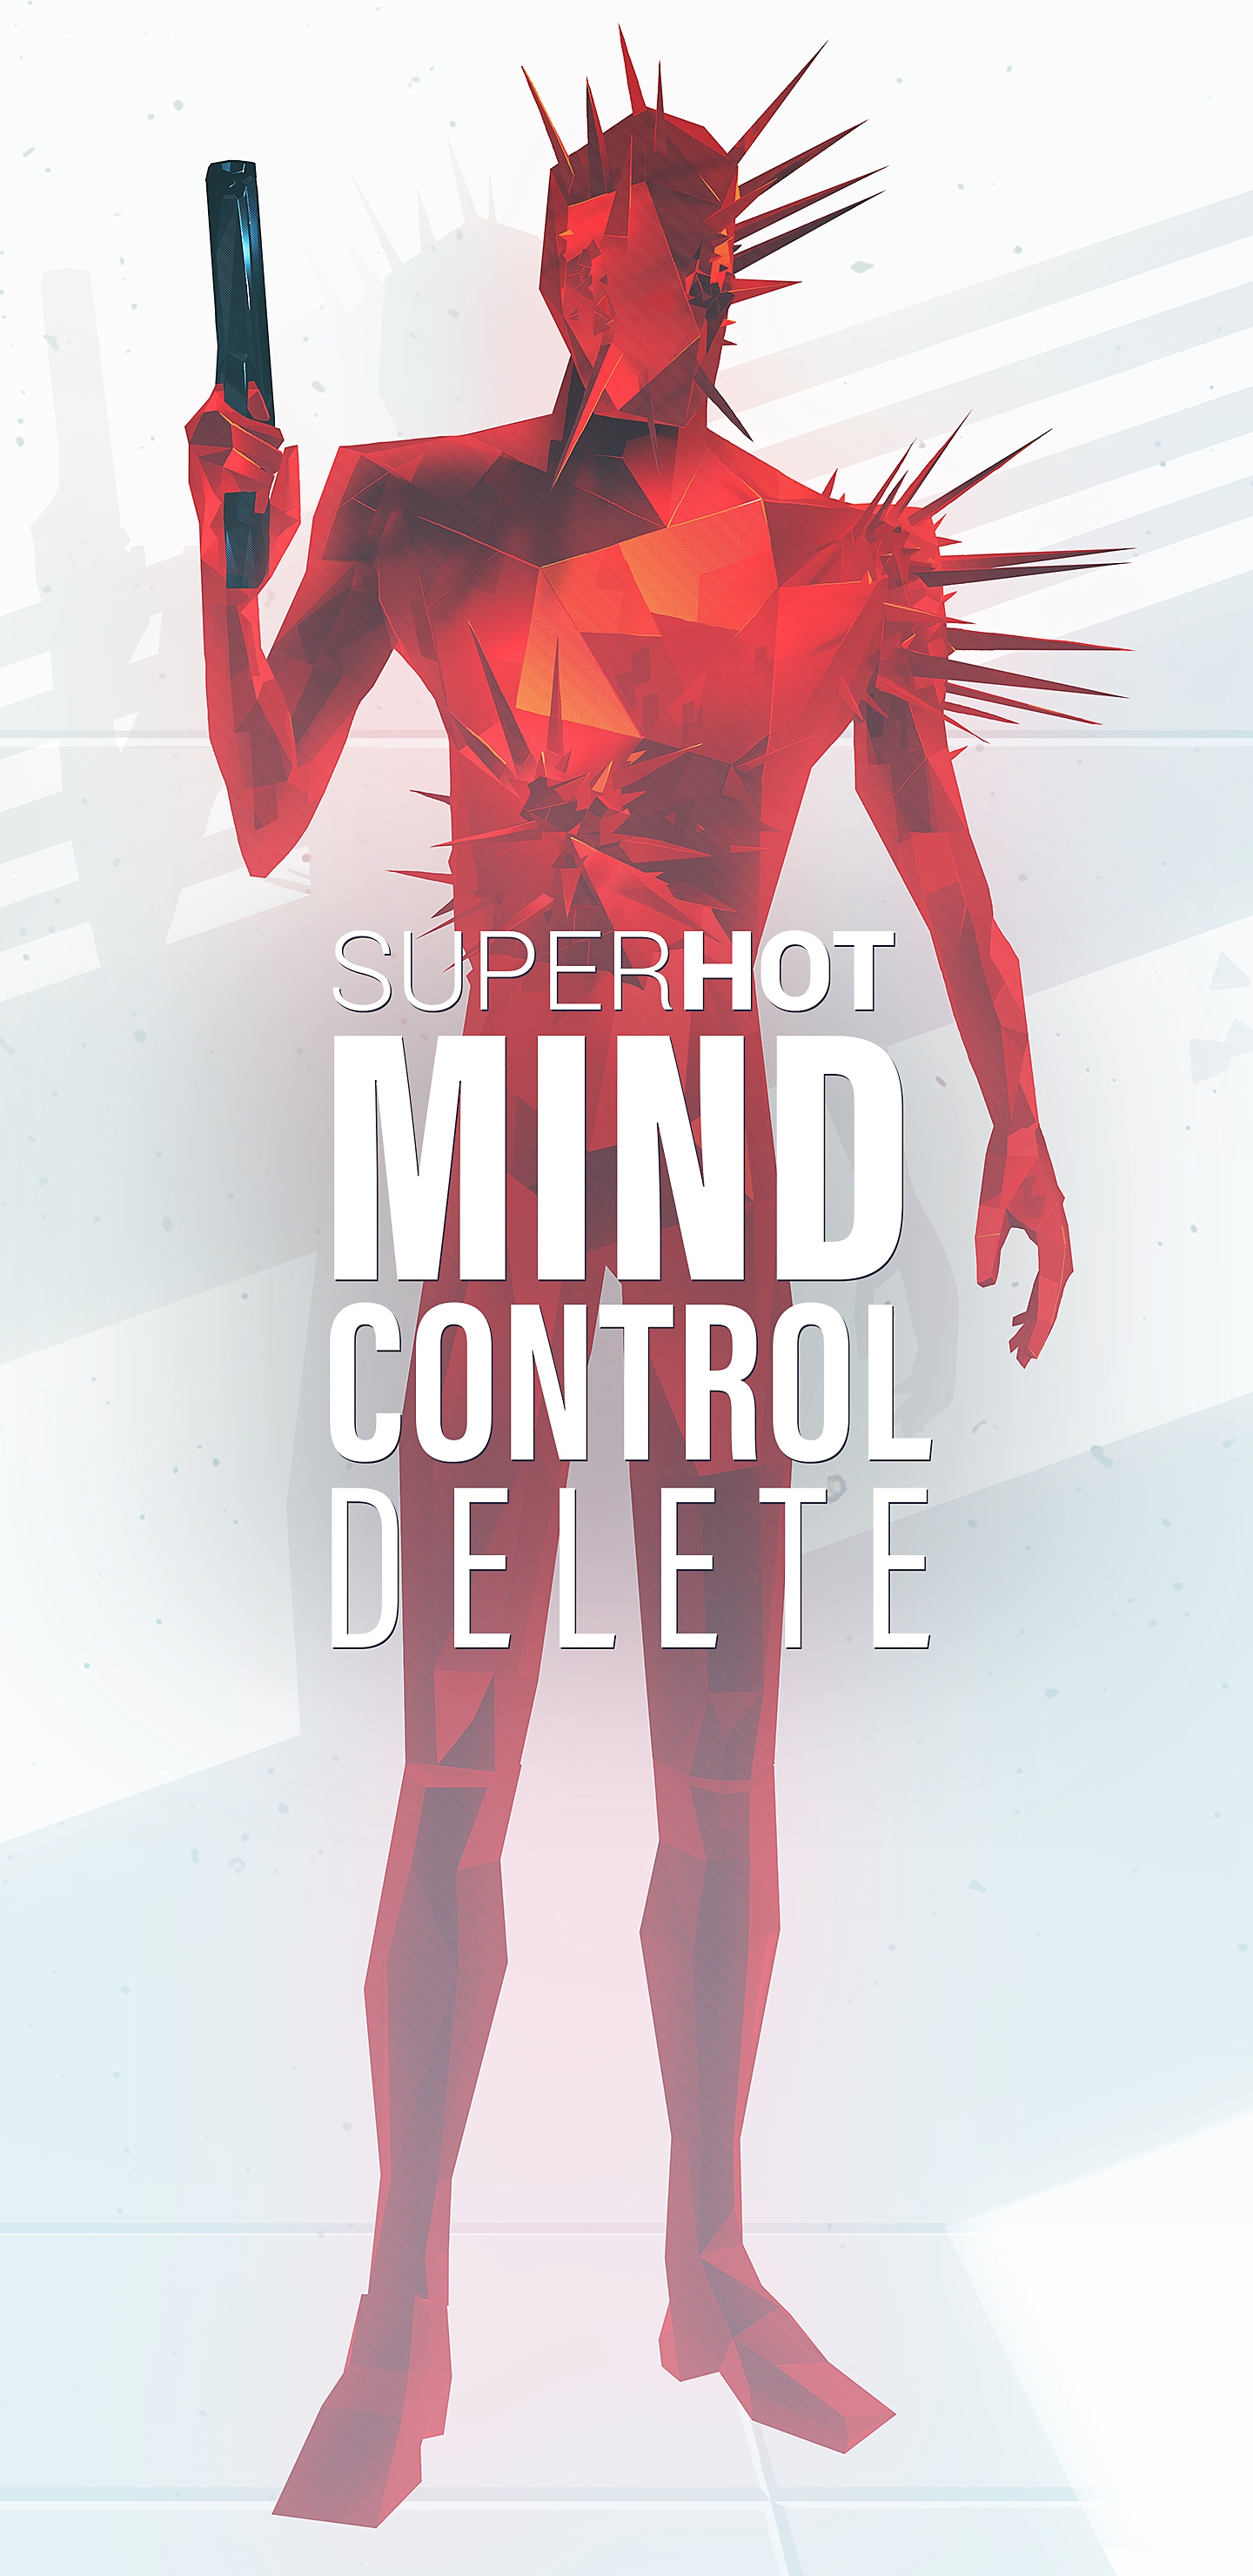 SUPERHOT: MIND CONTROL DELETE Komórki